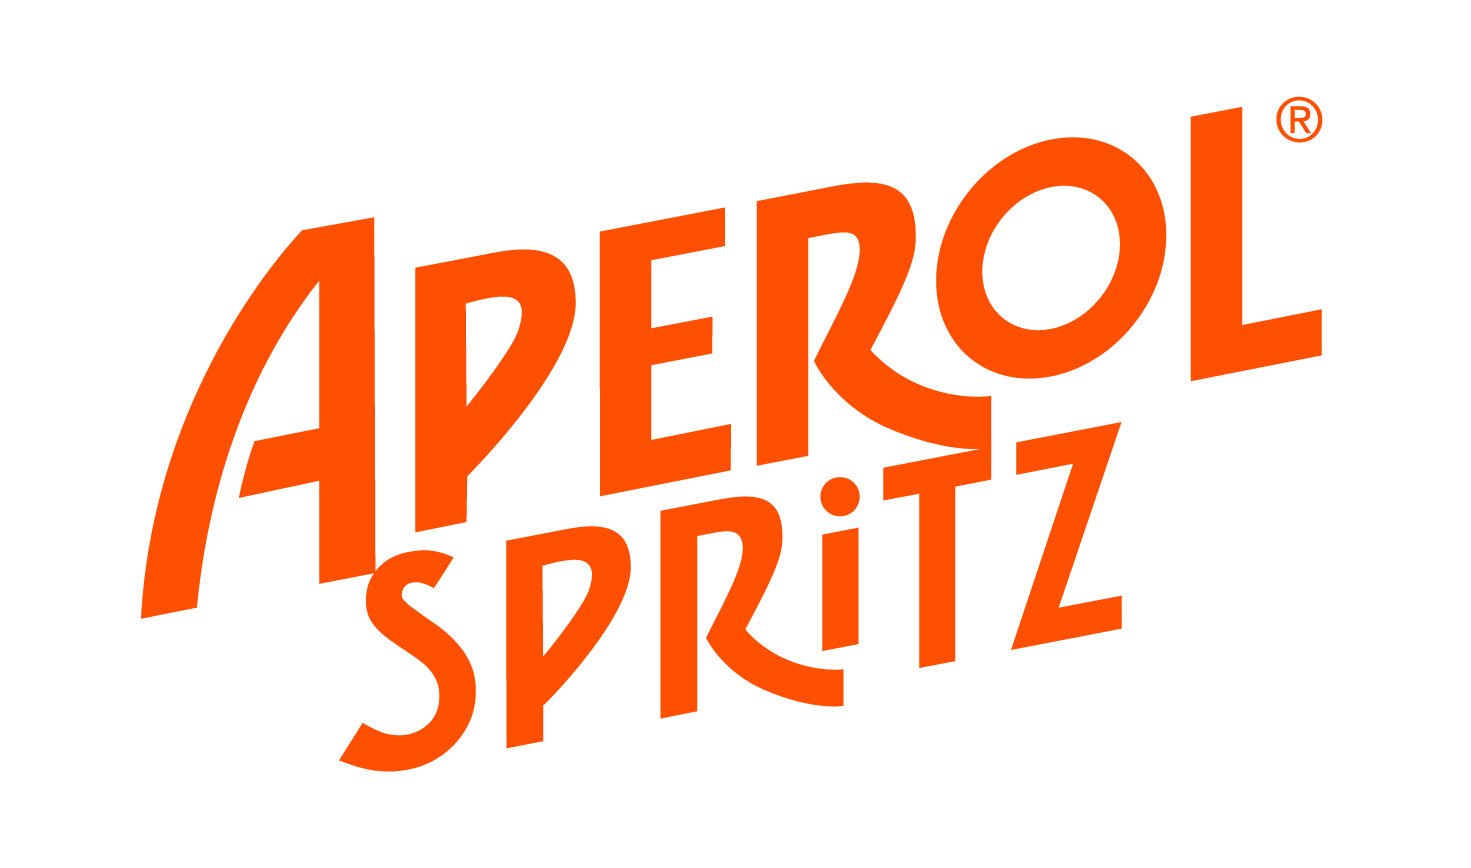 Orange Aperol Spritz logo